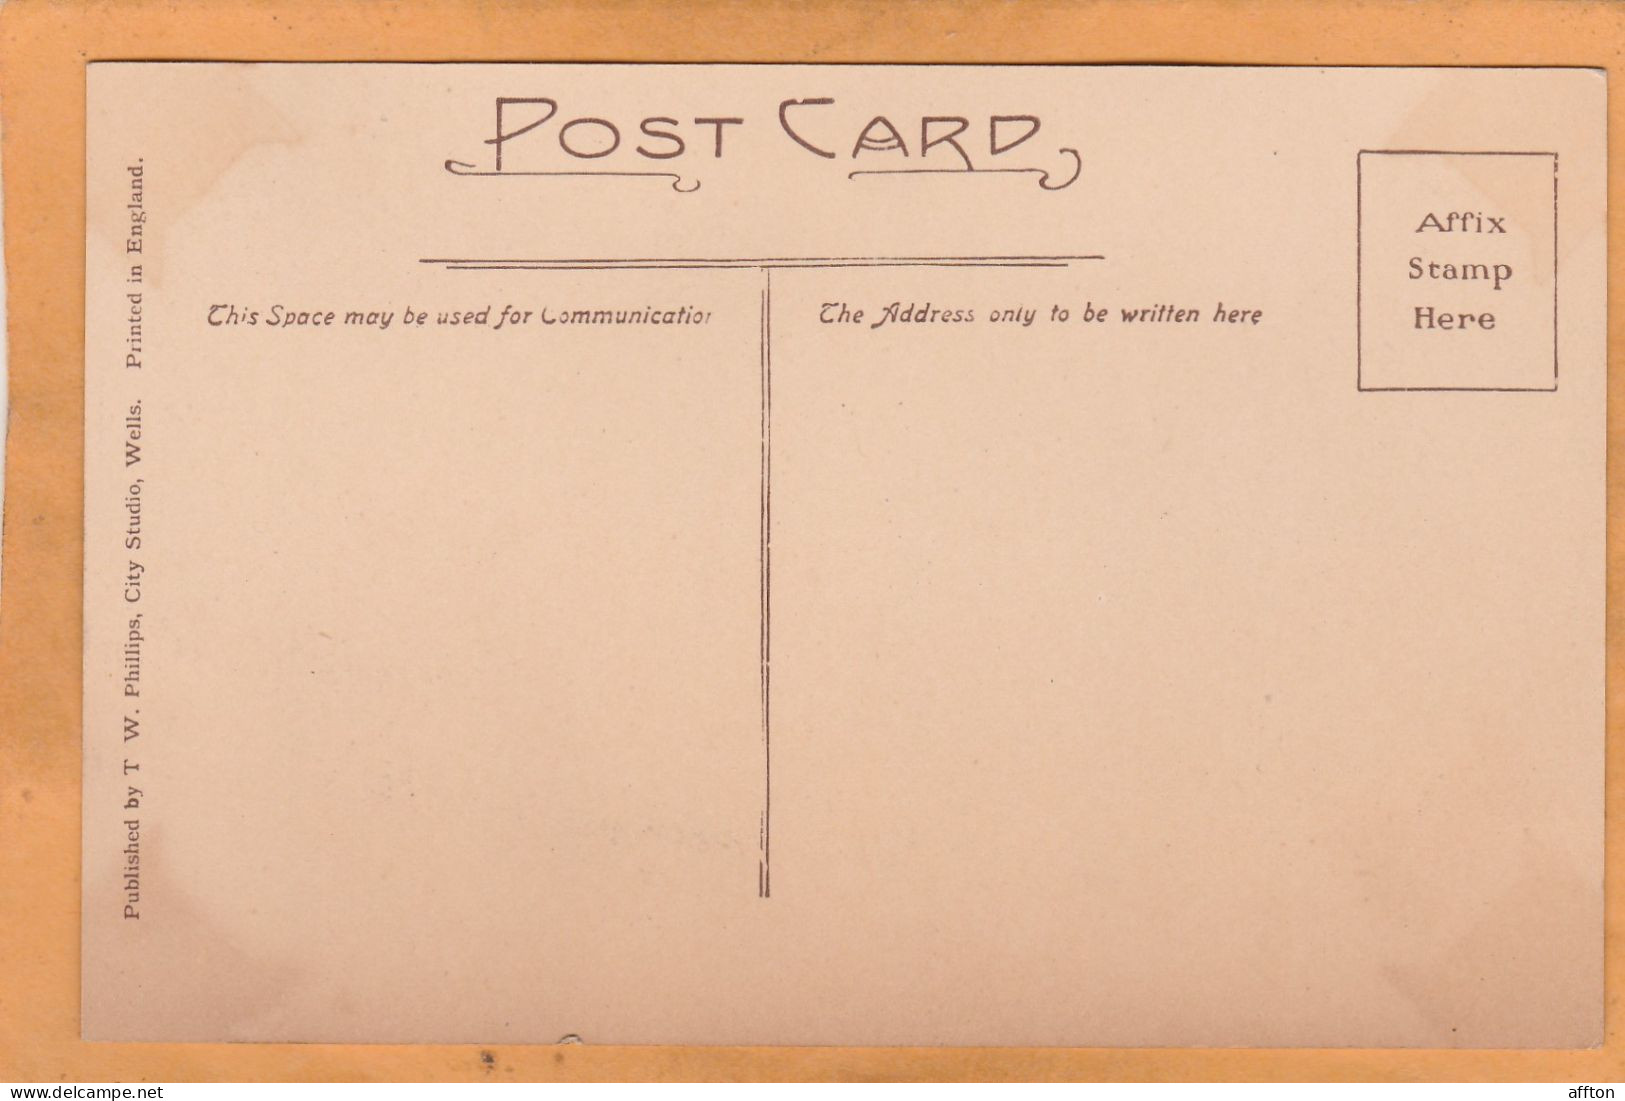 Wells 1920 Postcard - Wells